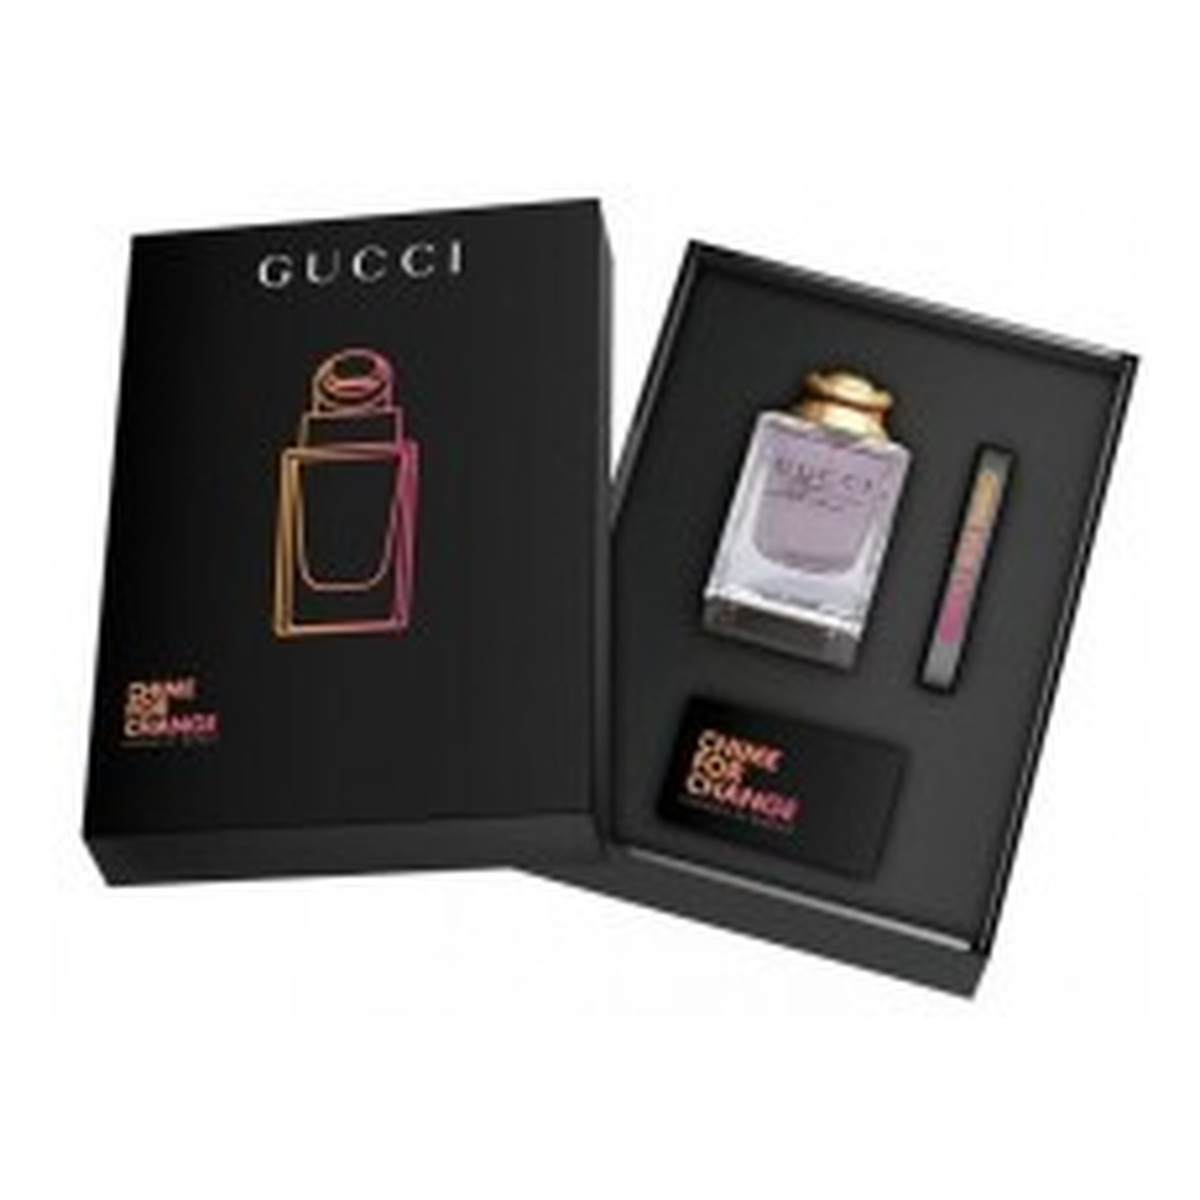 Gucci by Gucci Made to Measure zestaw woda toaletowa spray + bransoletka + voucher 90ml